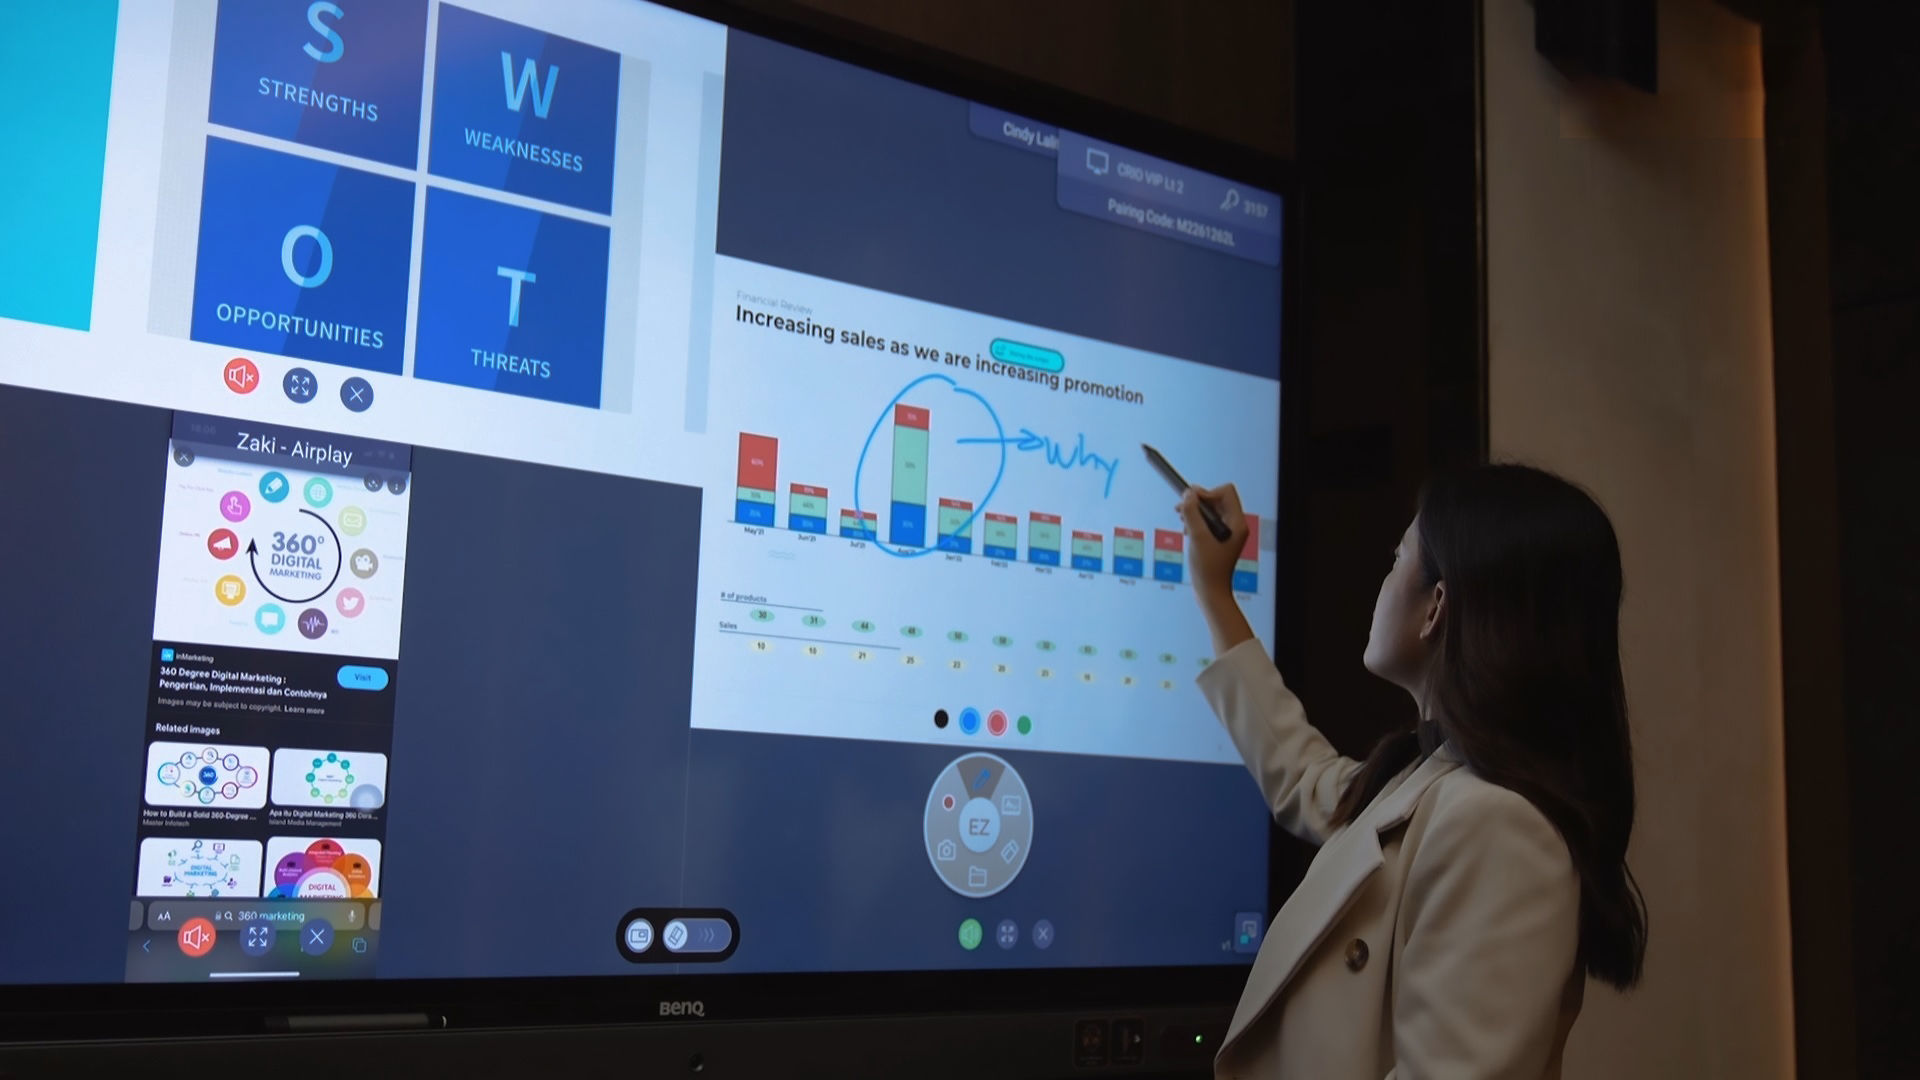 Microsoft Teams and SMART interactive displays